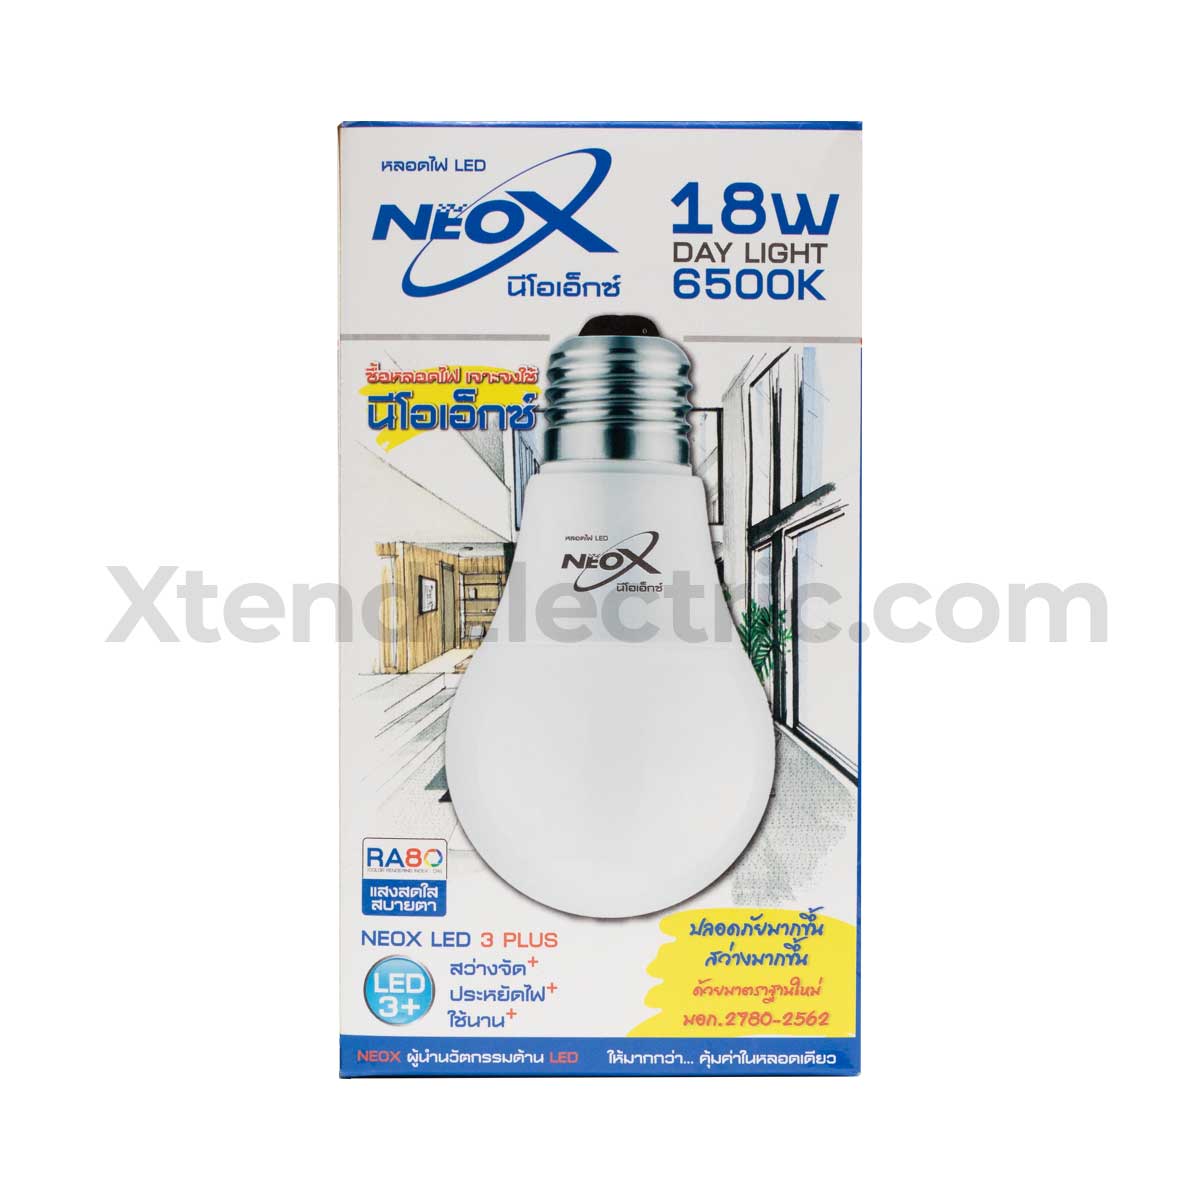 Neox-LED-18w-DL-02